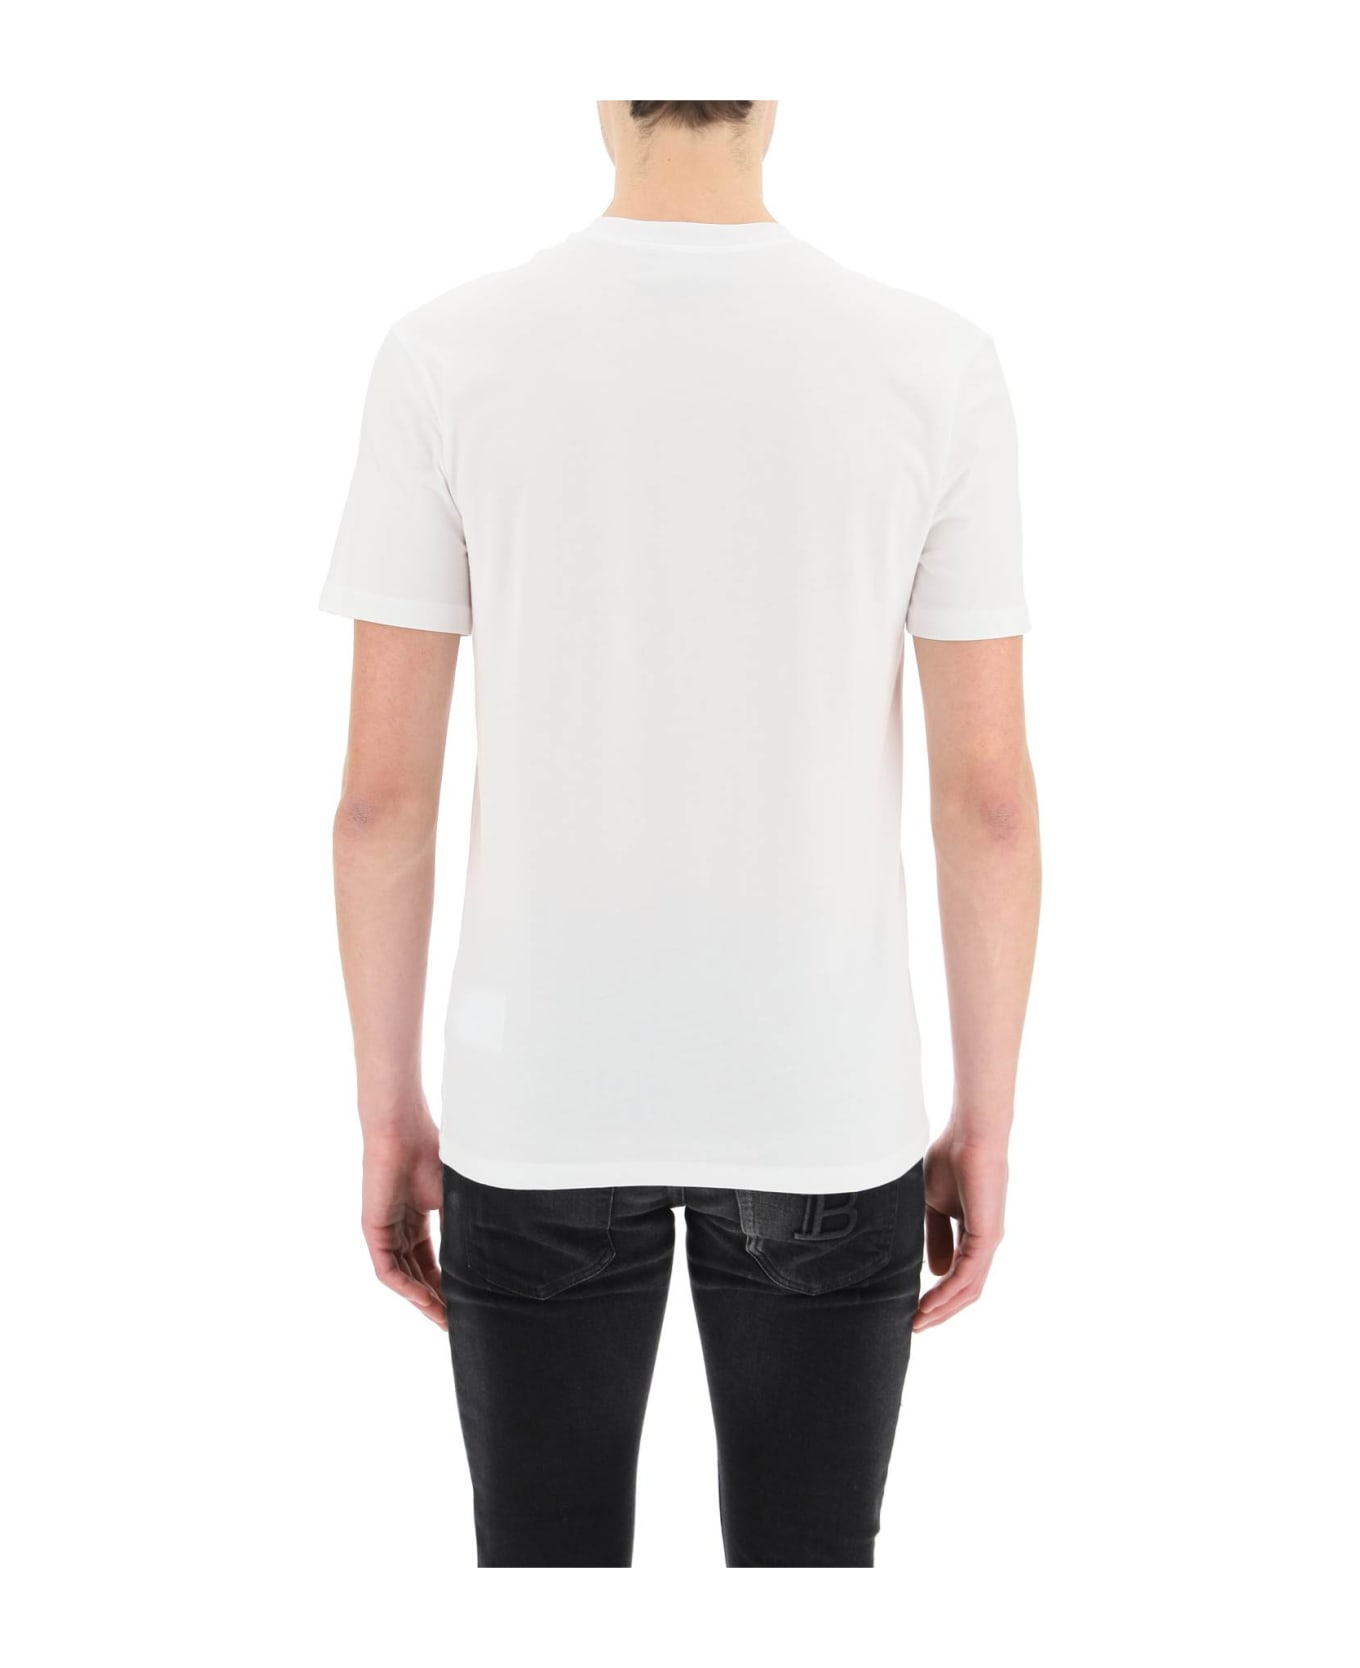 Moschino Logo Print T-shirt - Bianco